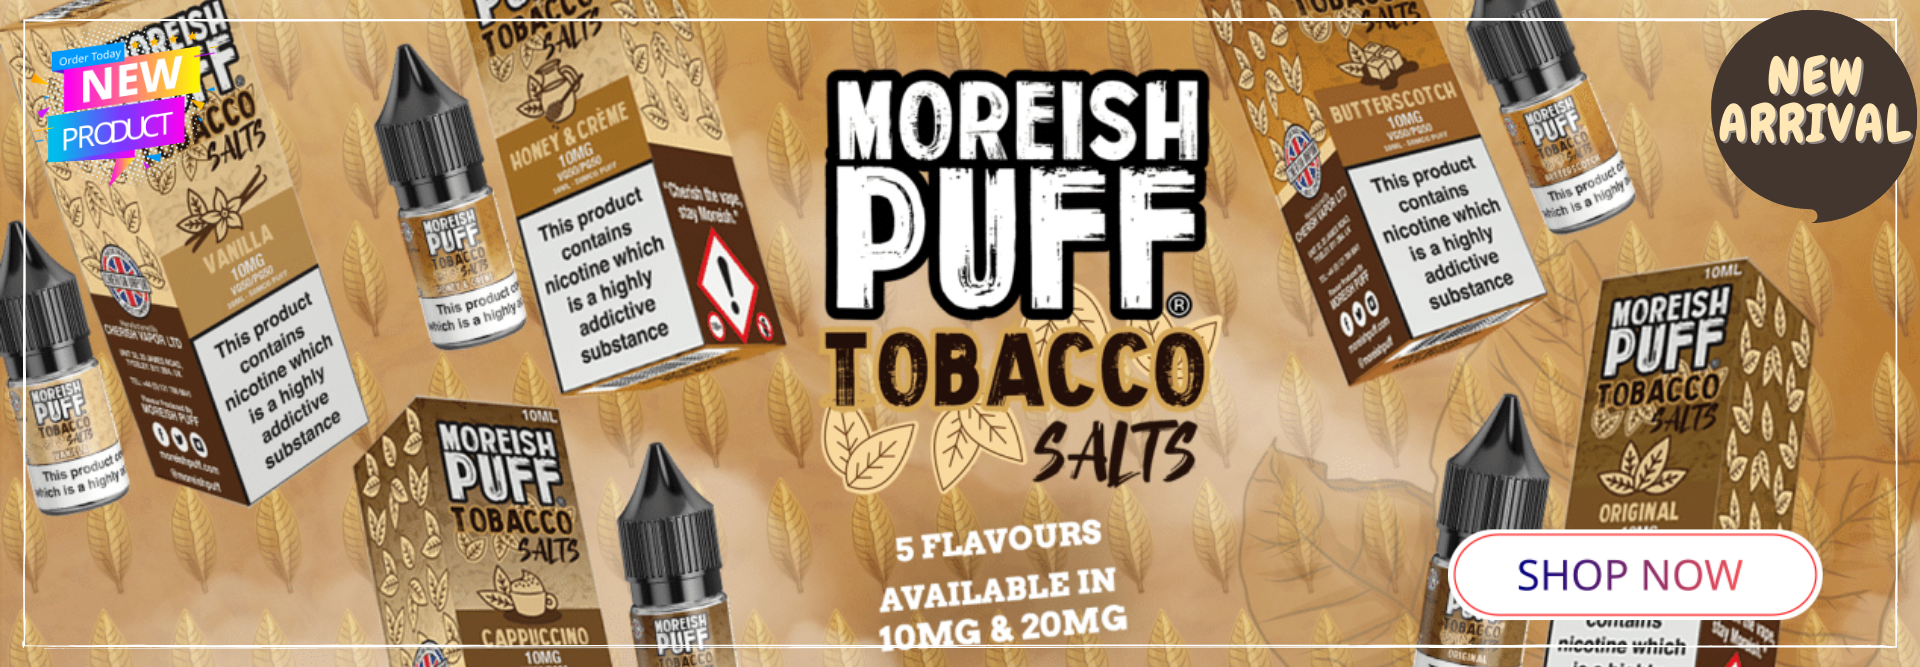 Moriesh puff tobacco